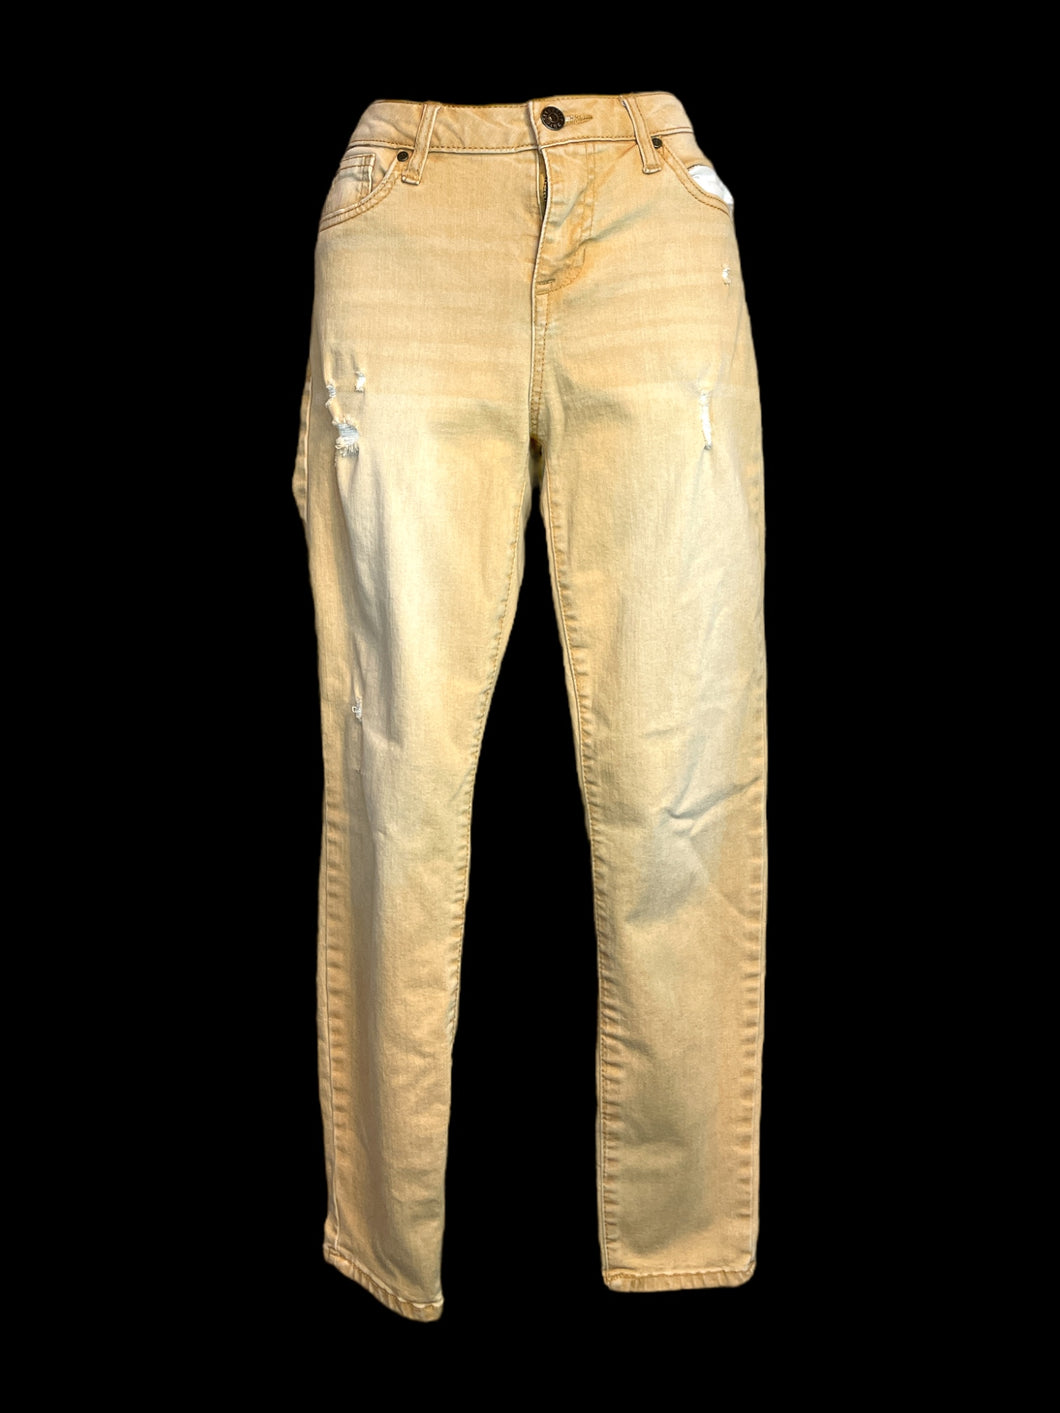 S Pale yellow distressed high waist taper leg pants w/ belt loops, pockets, & button/zipper closure